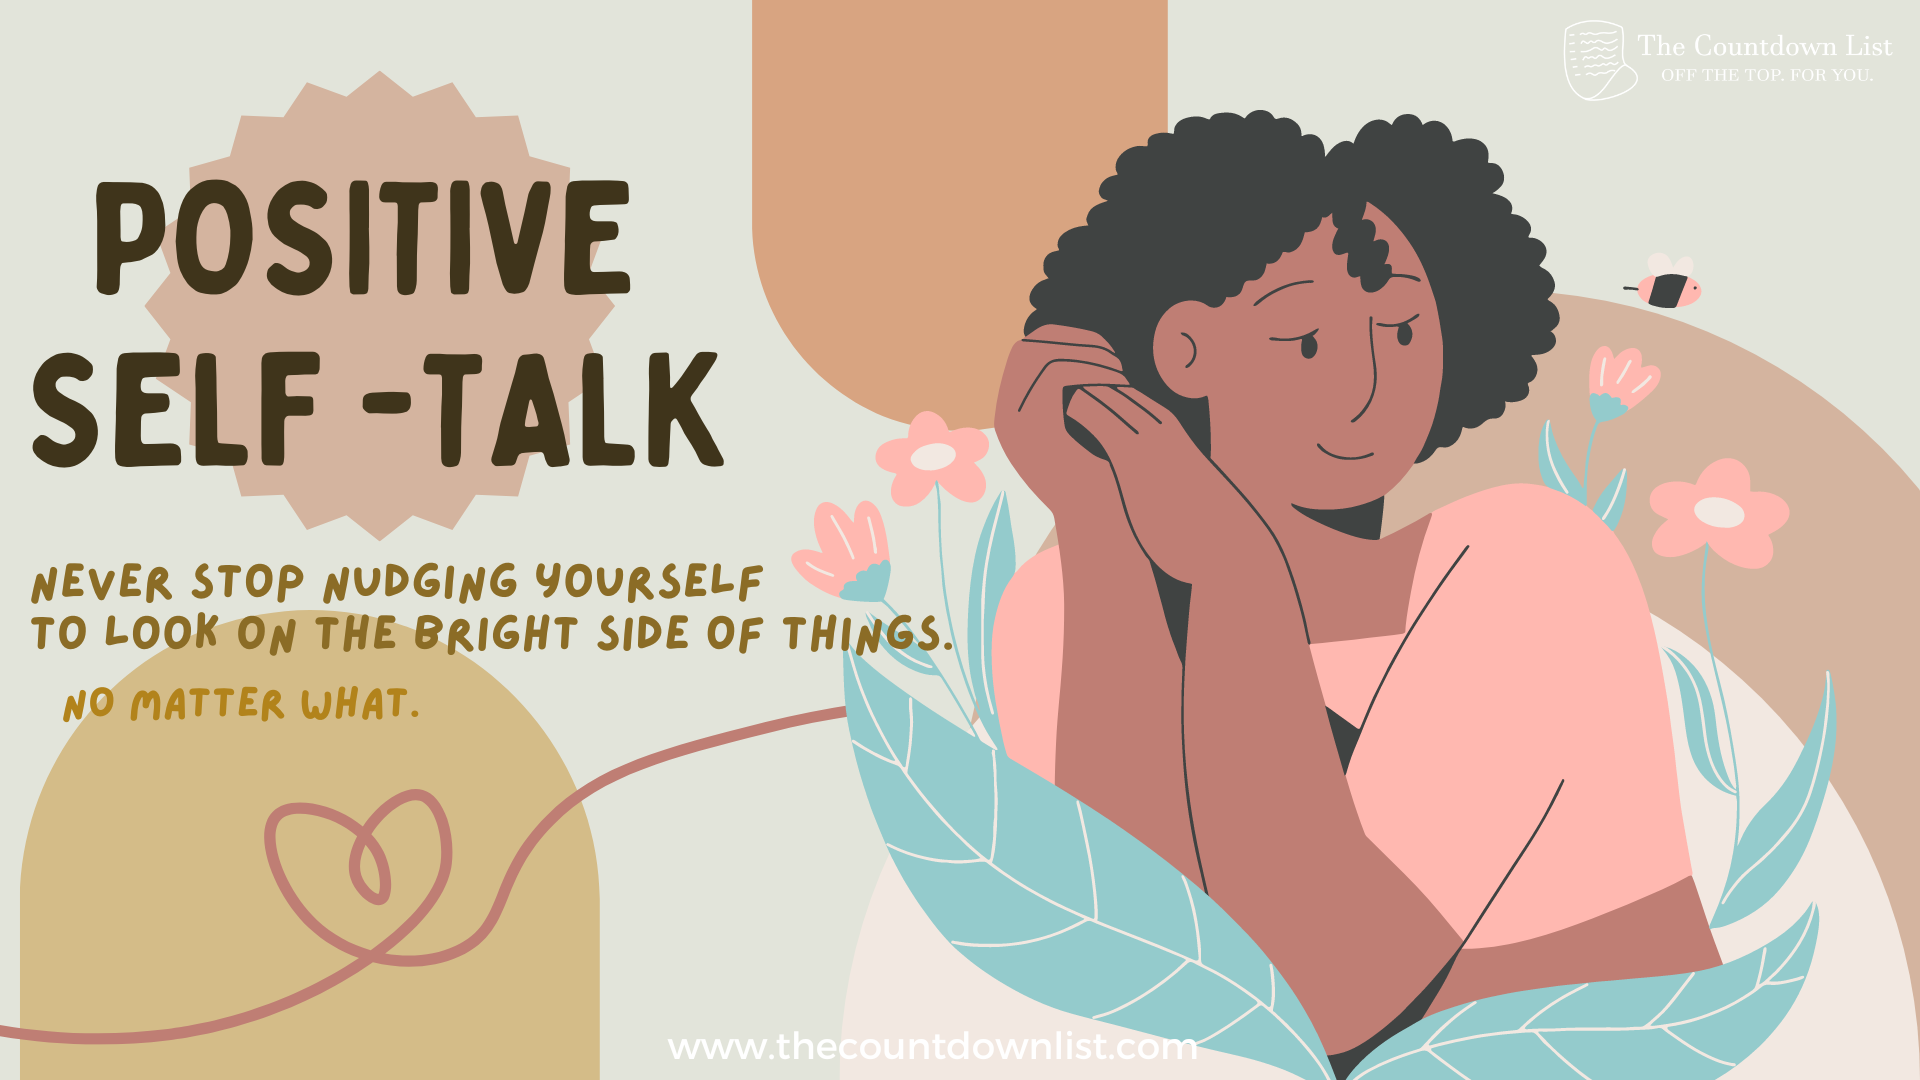 Positive self-talk